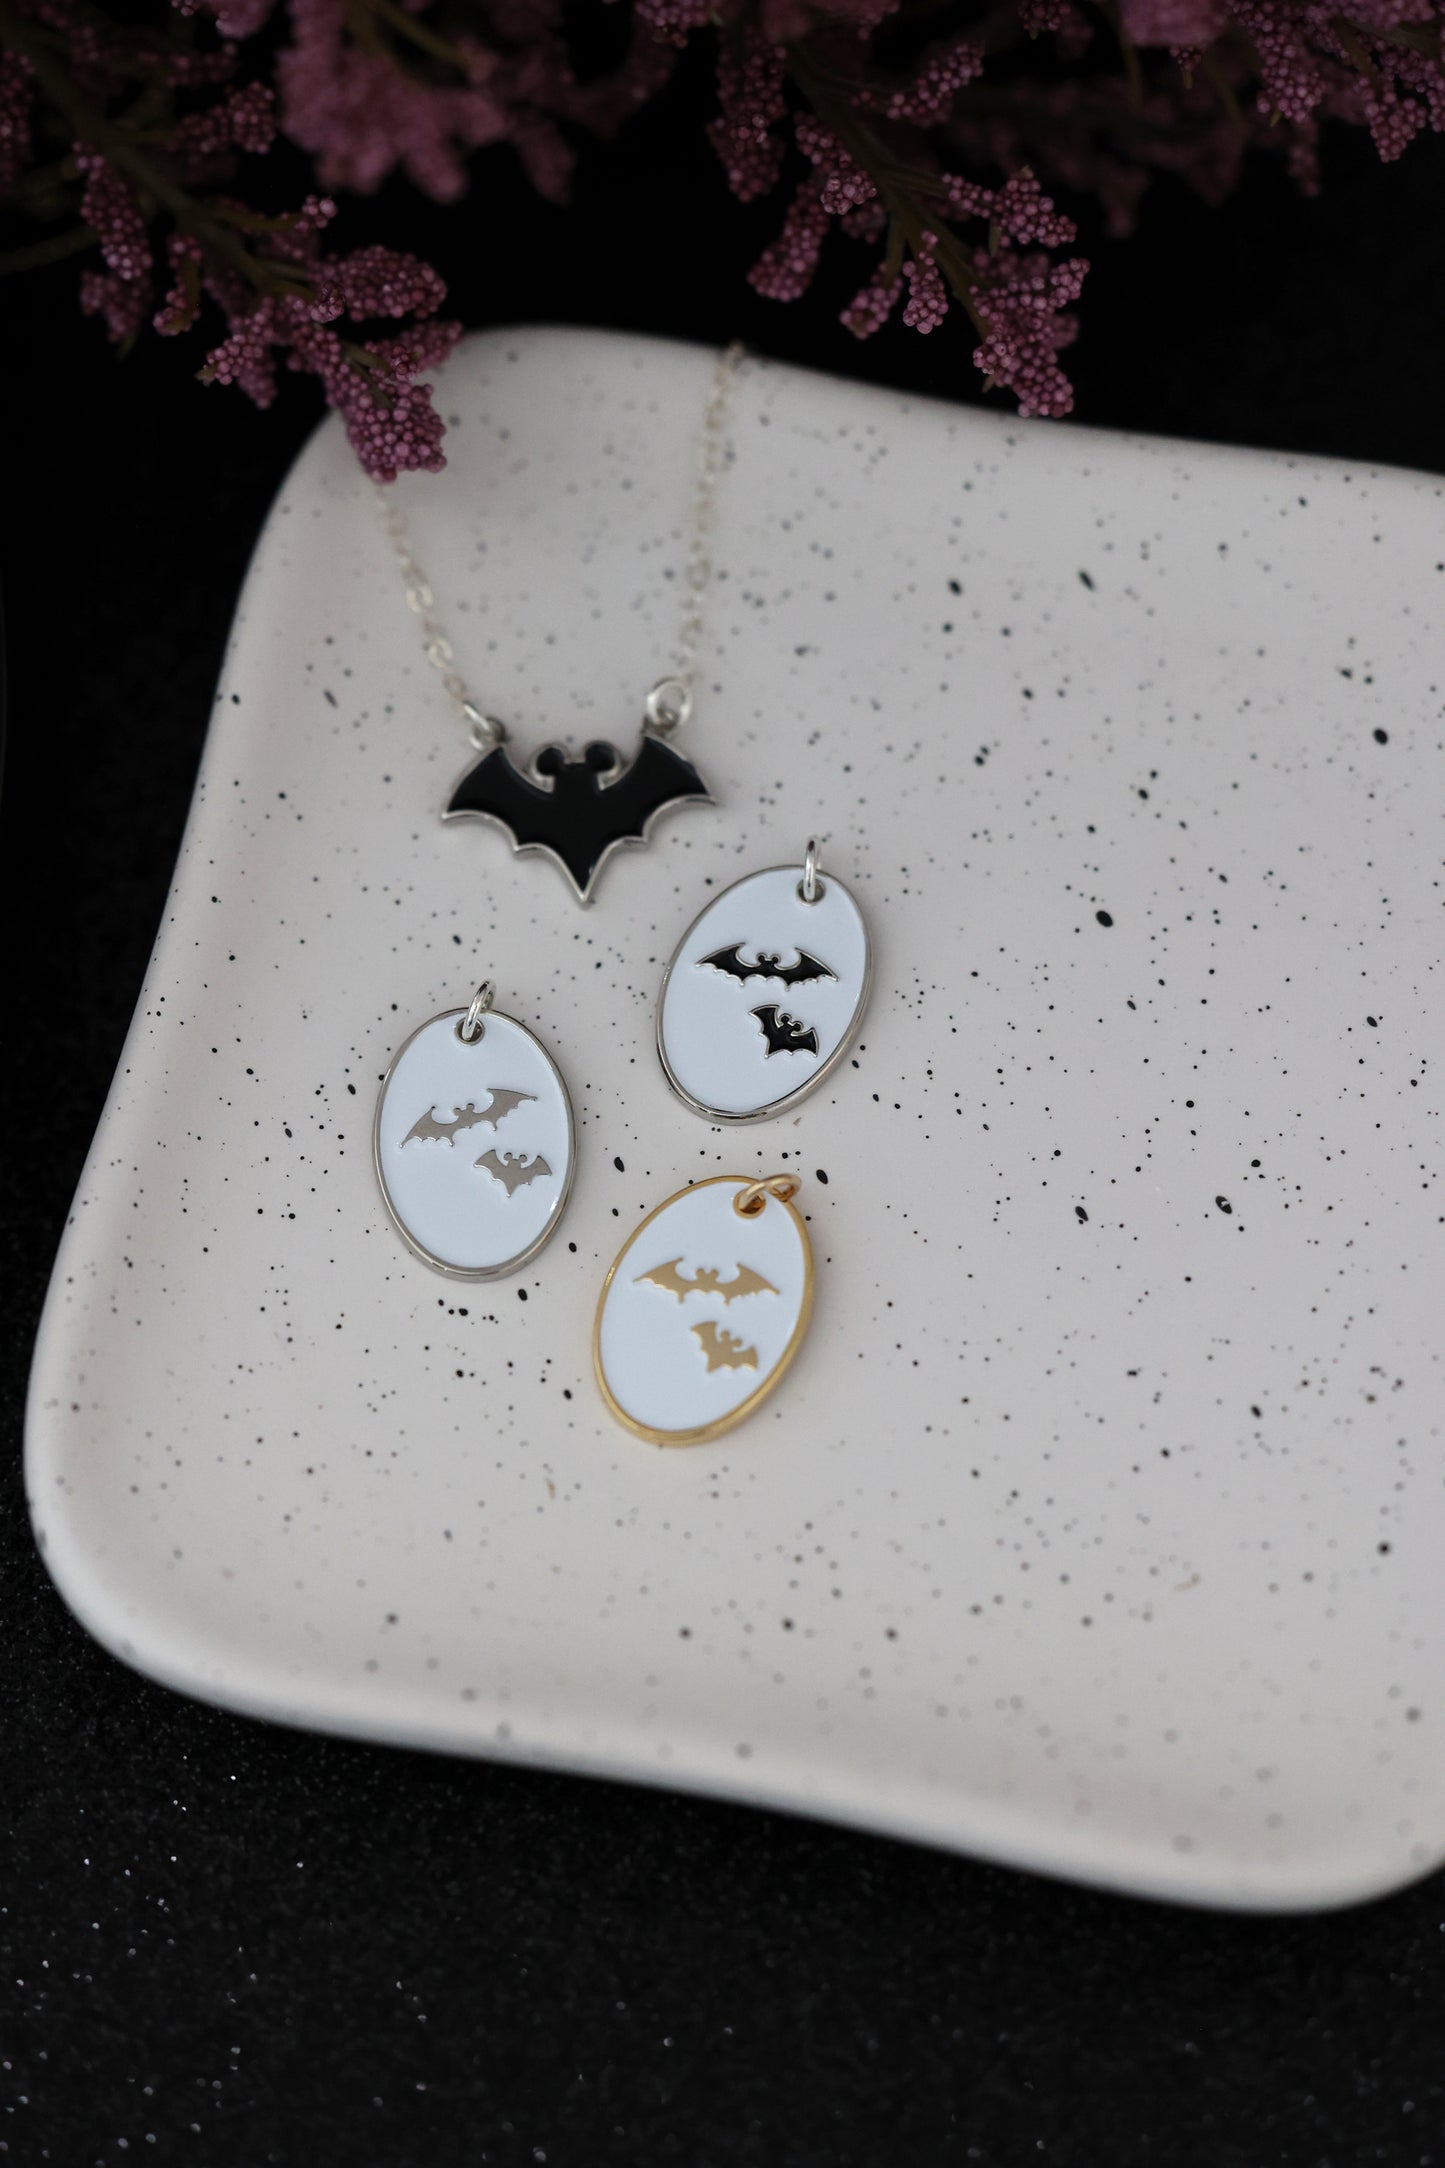 Pixie Dust Collection - Oval Bat Necklace